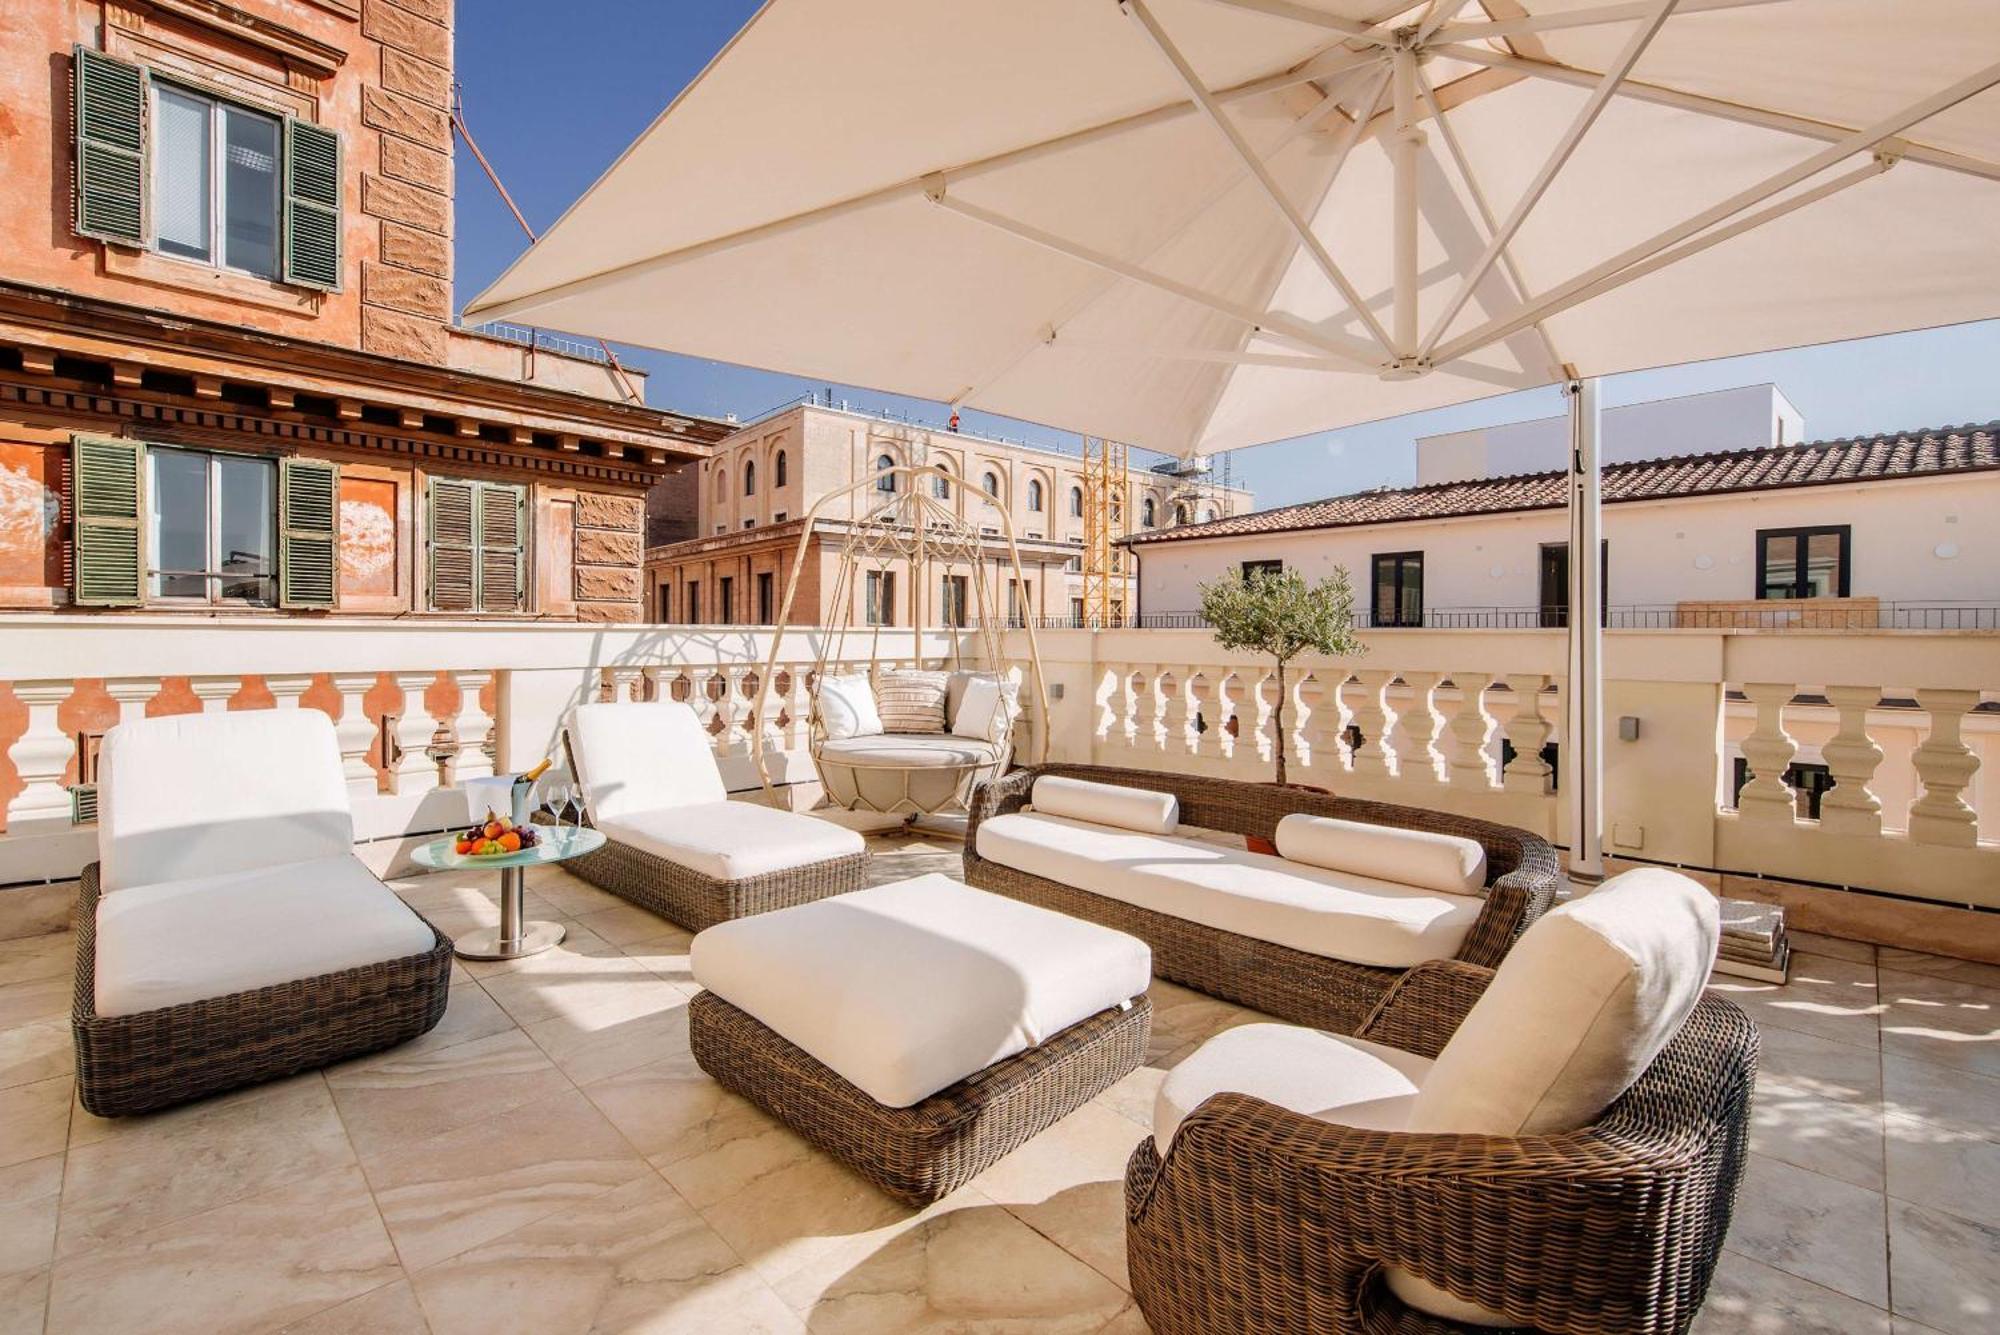 Aleph Rome Hotel, Curio Collection By Hilton Exterior photo